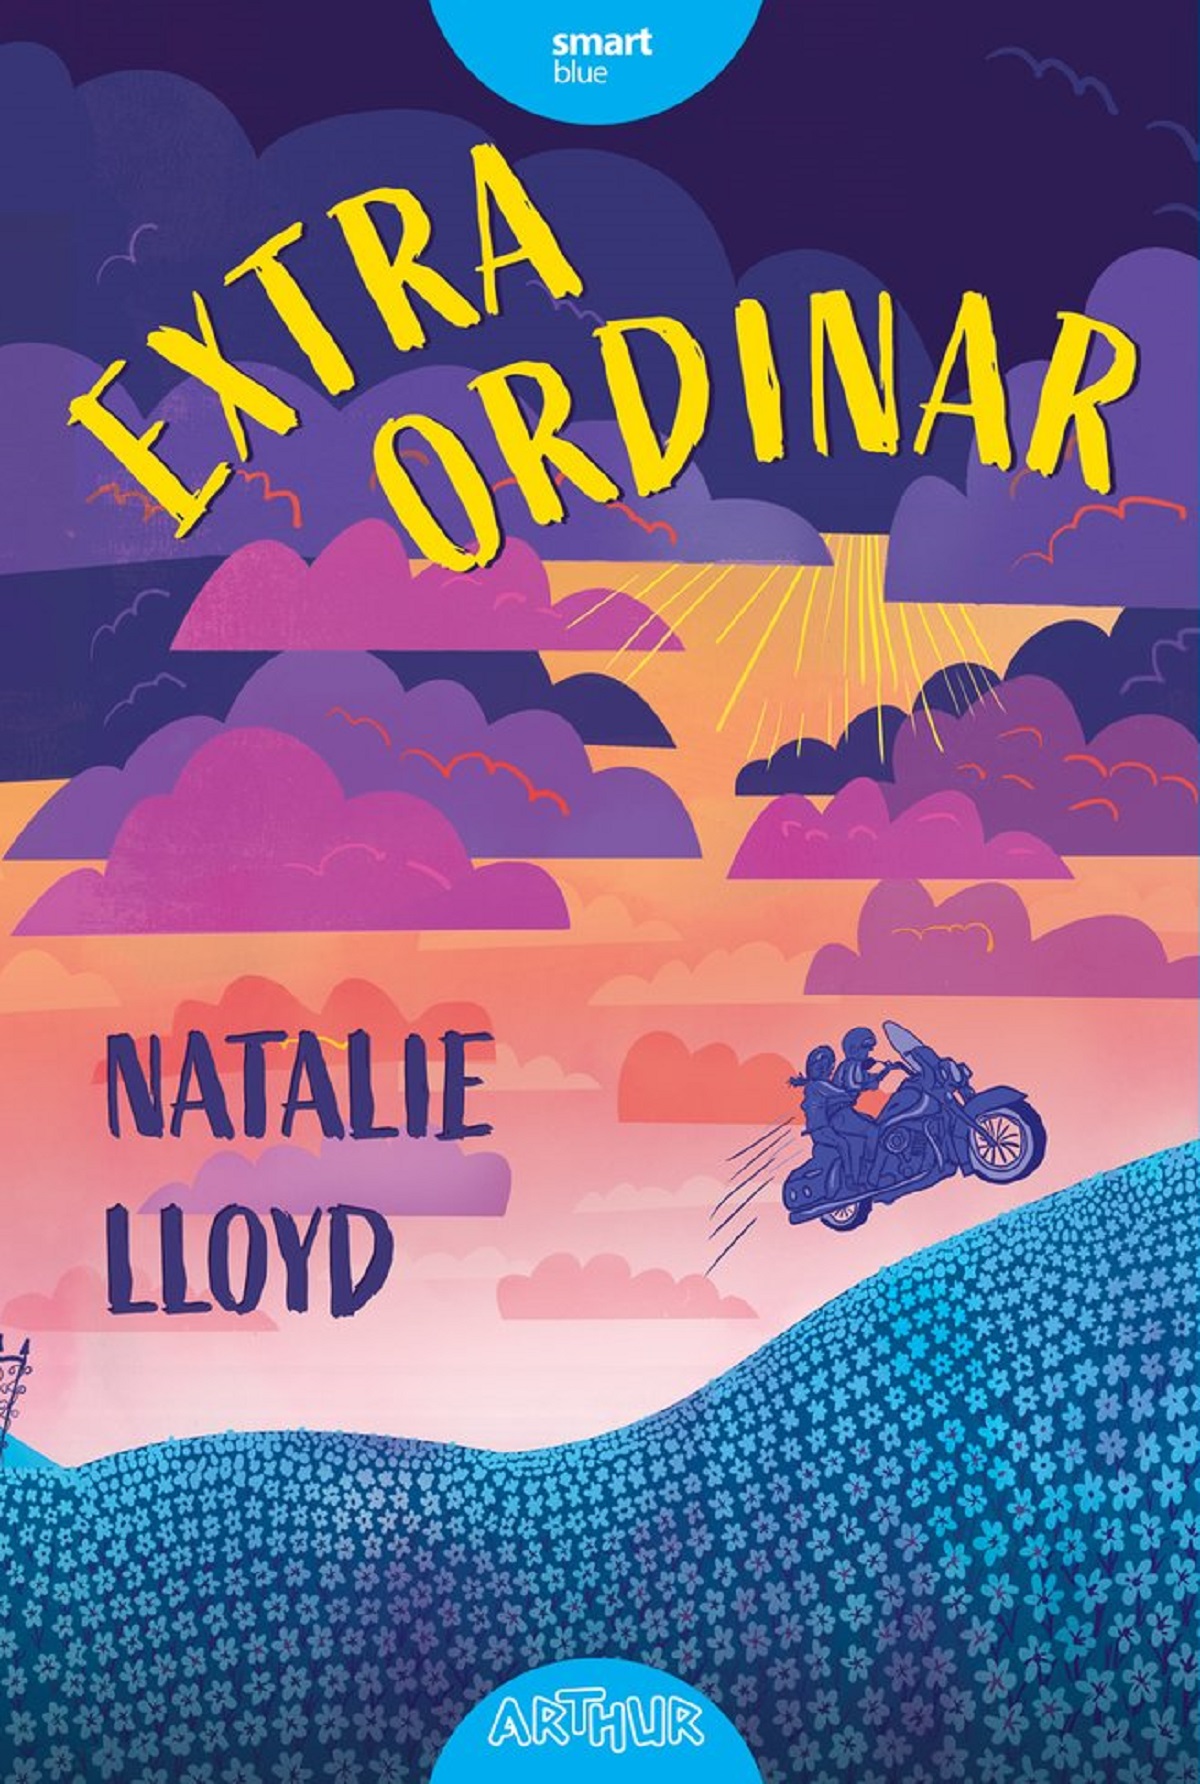 Extraordinar - Natalie Lloyd